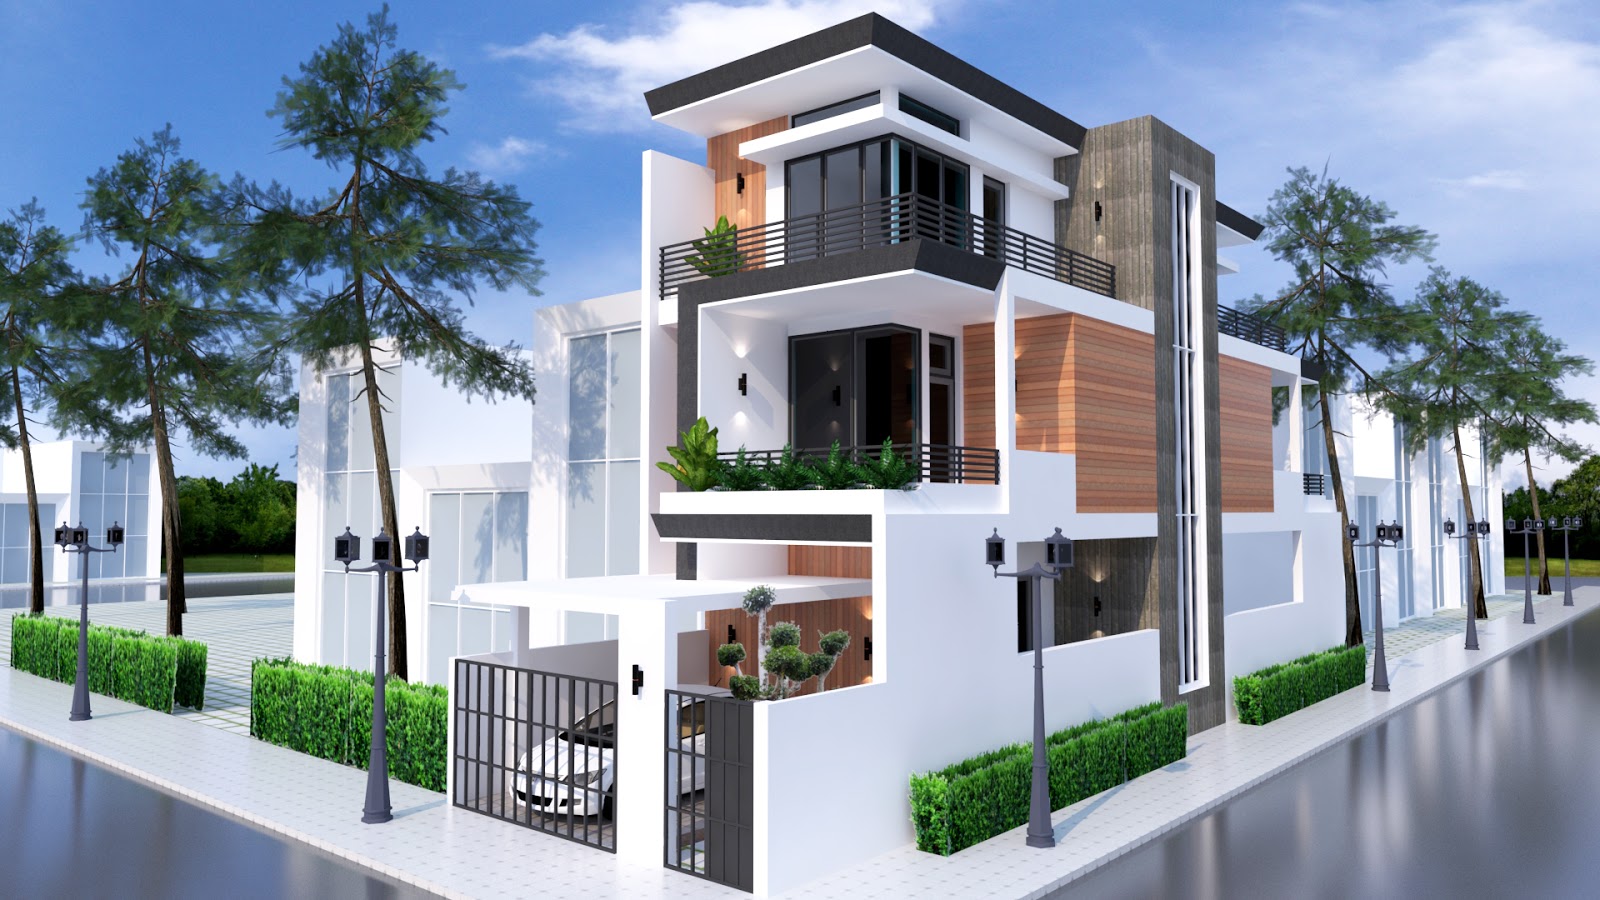  Sketchup  Home Elevation design 6m Samphoas House Plan 